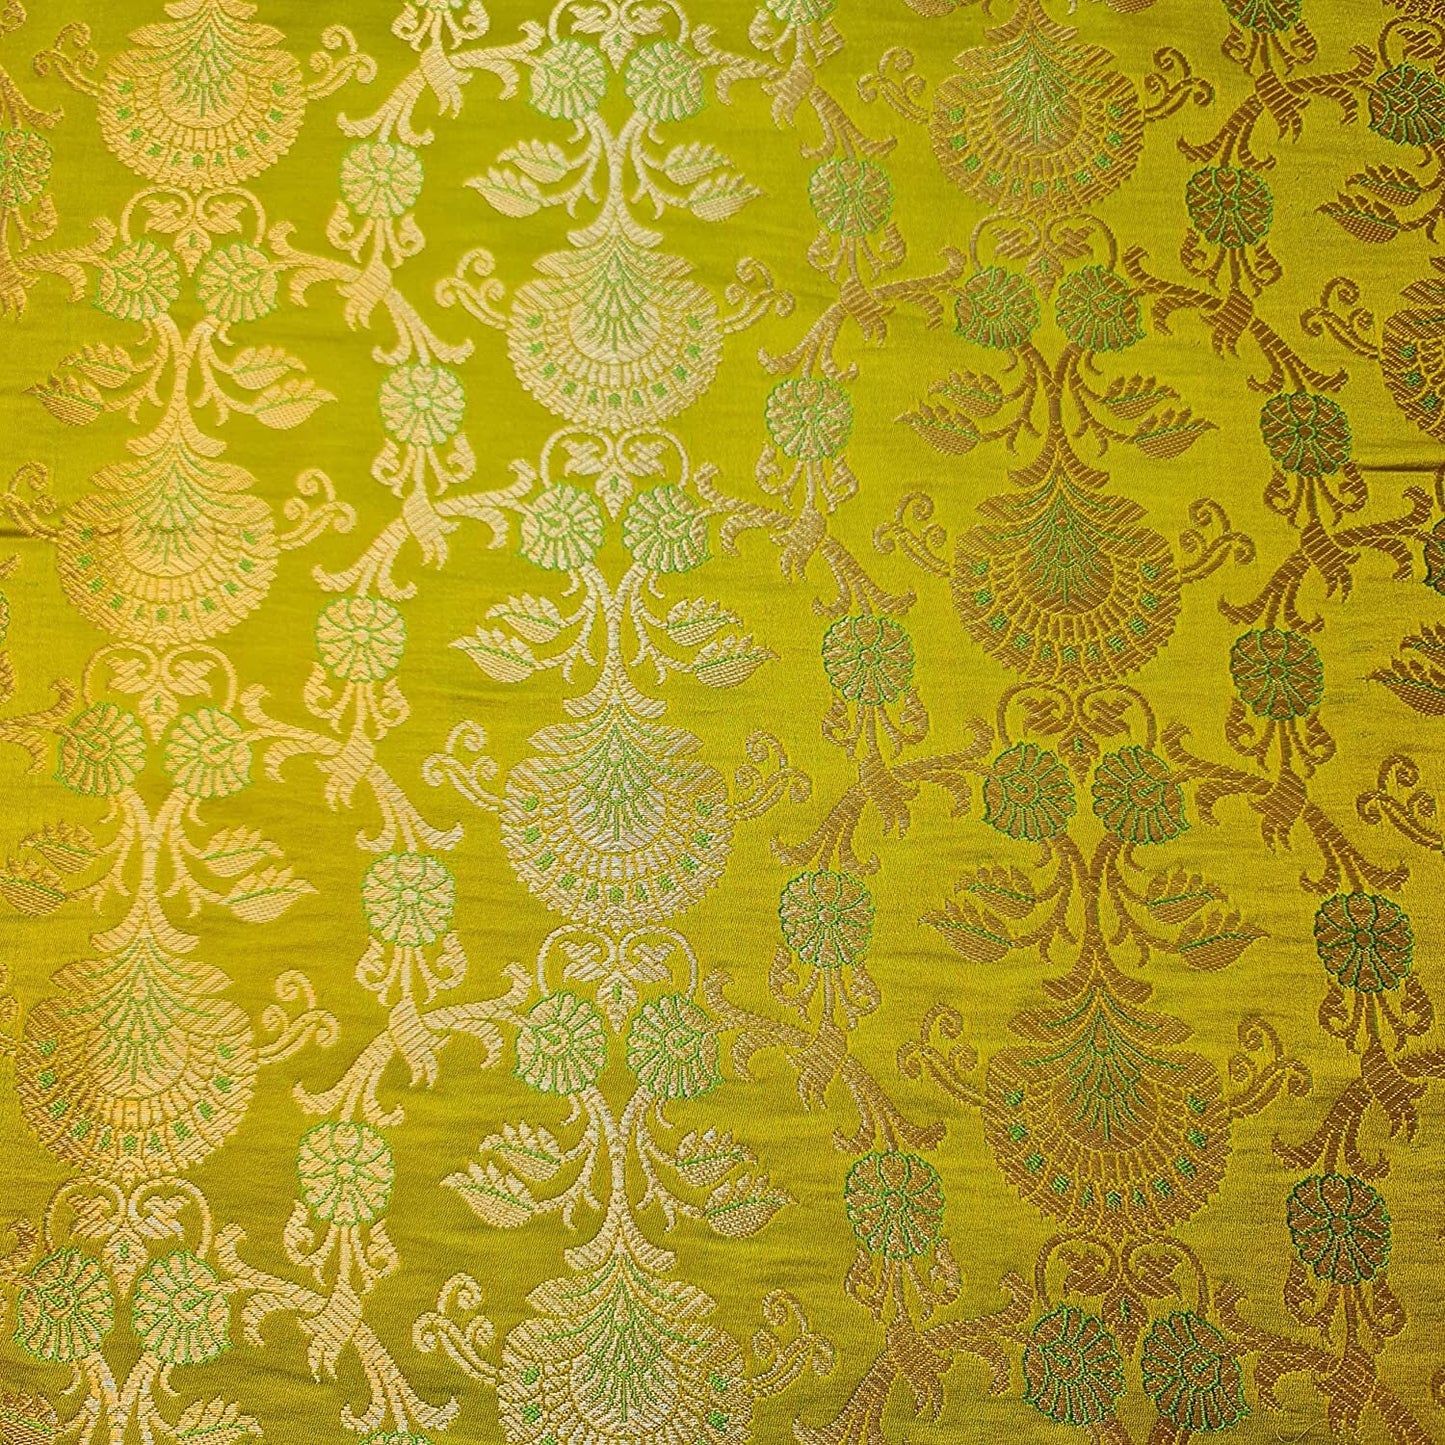 Ornamental Floral Gold Metallic Print Indian Banarasi Brocade Fabric (Lime)